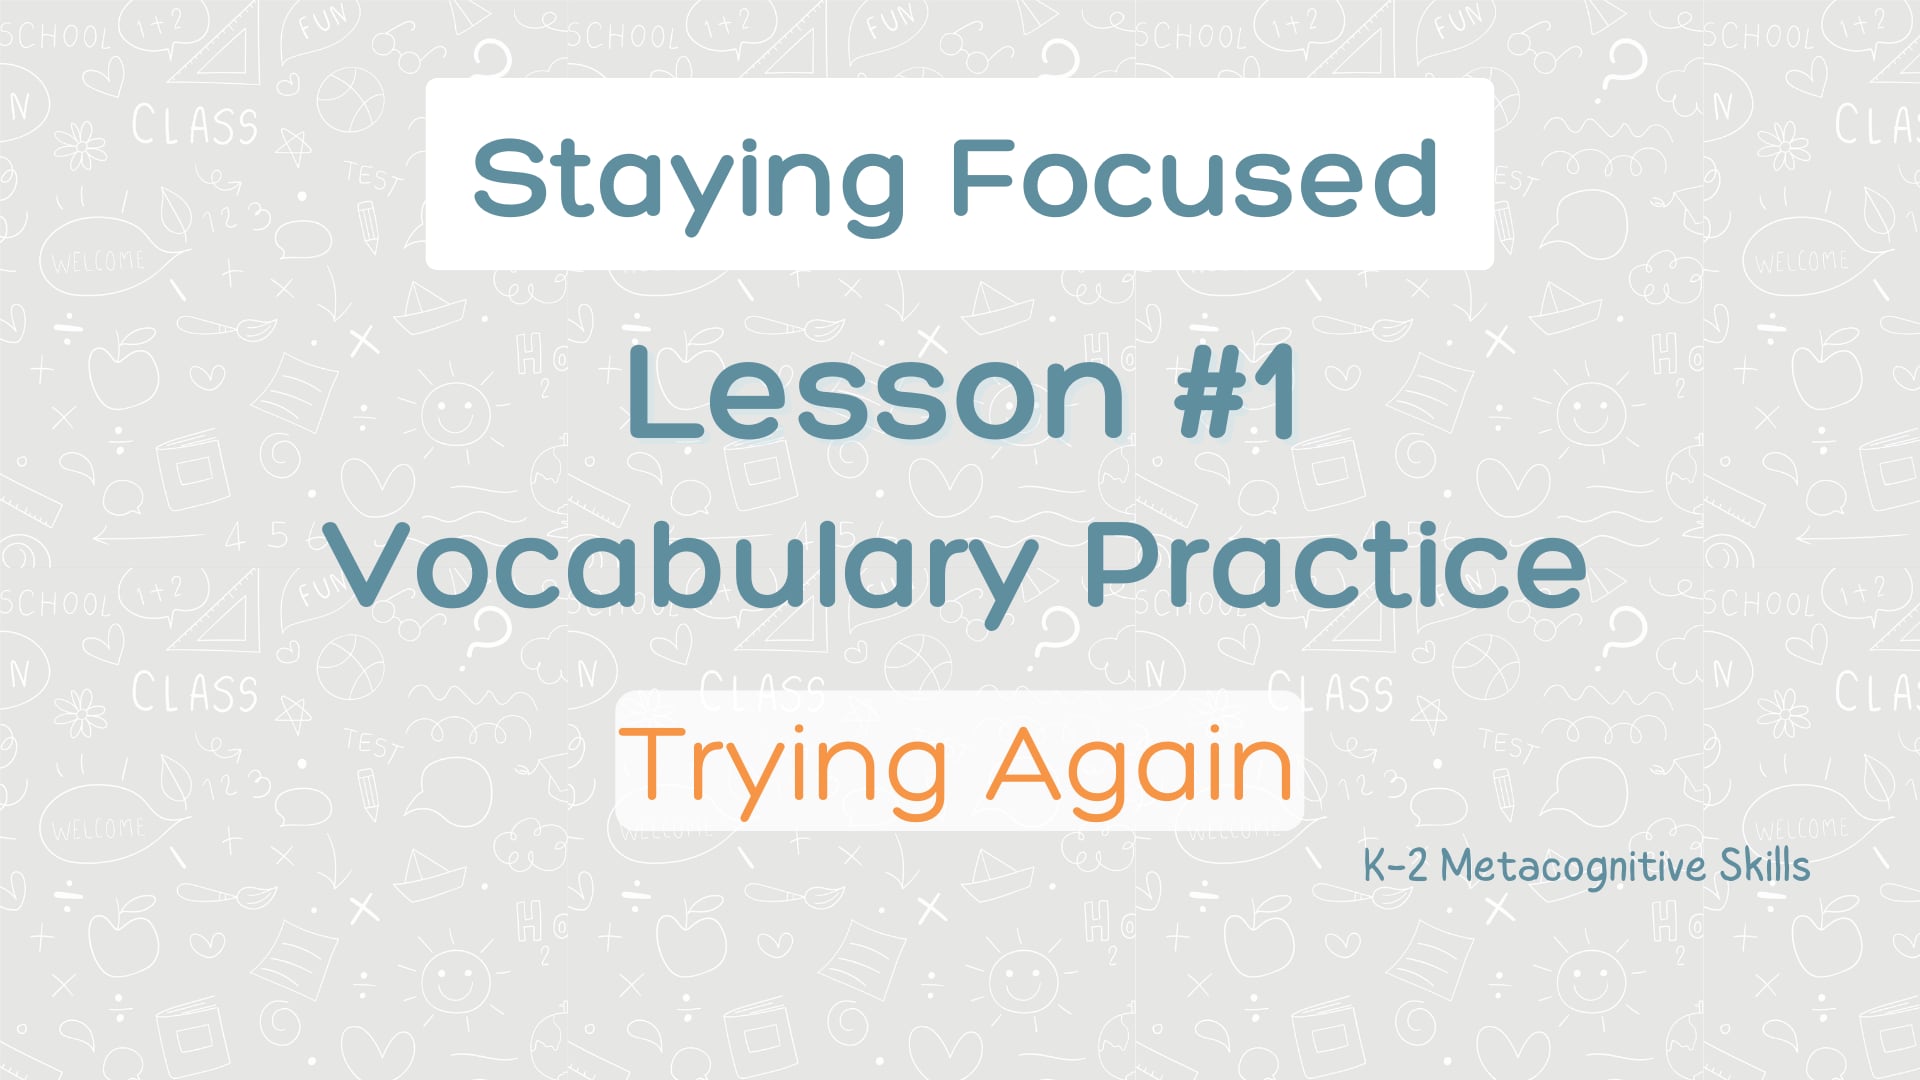 Lesson #1 Vocabulary Practice: Refocus video thumbnail